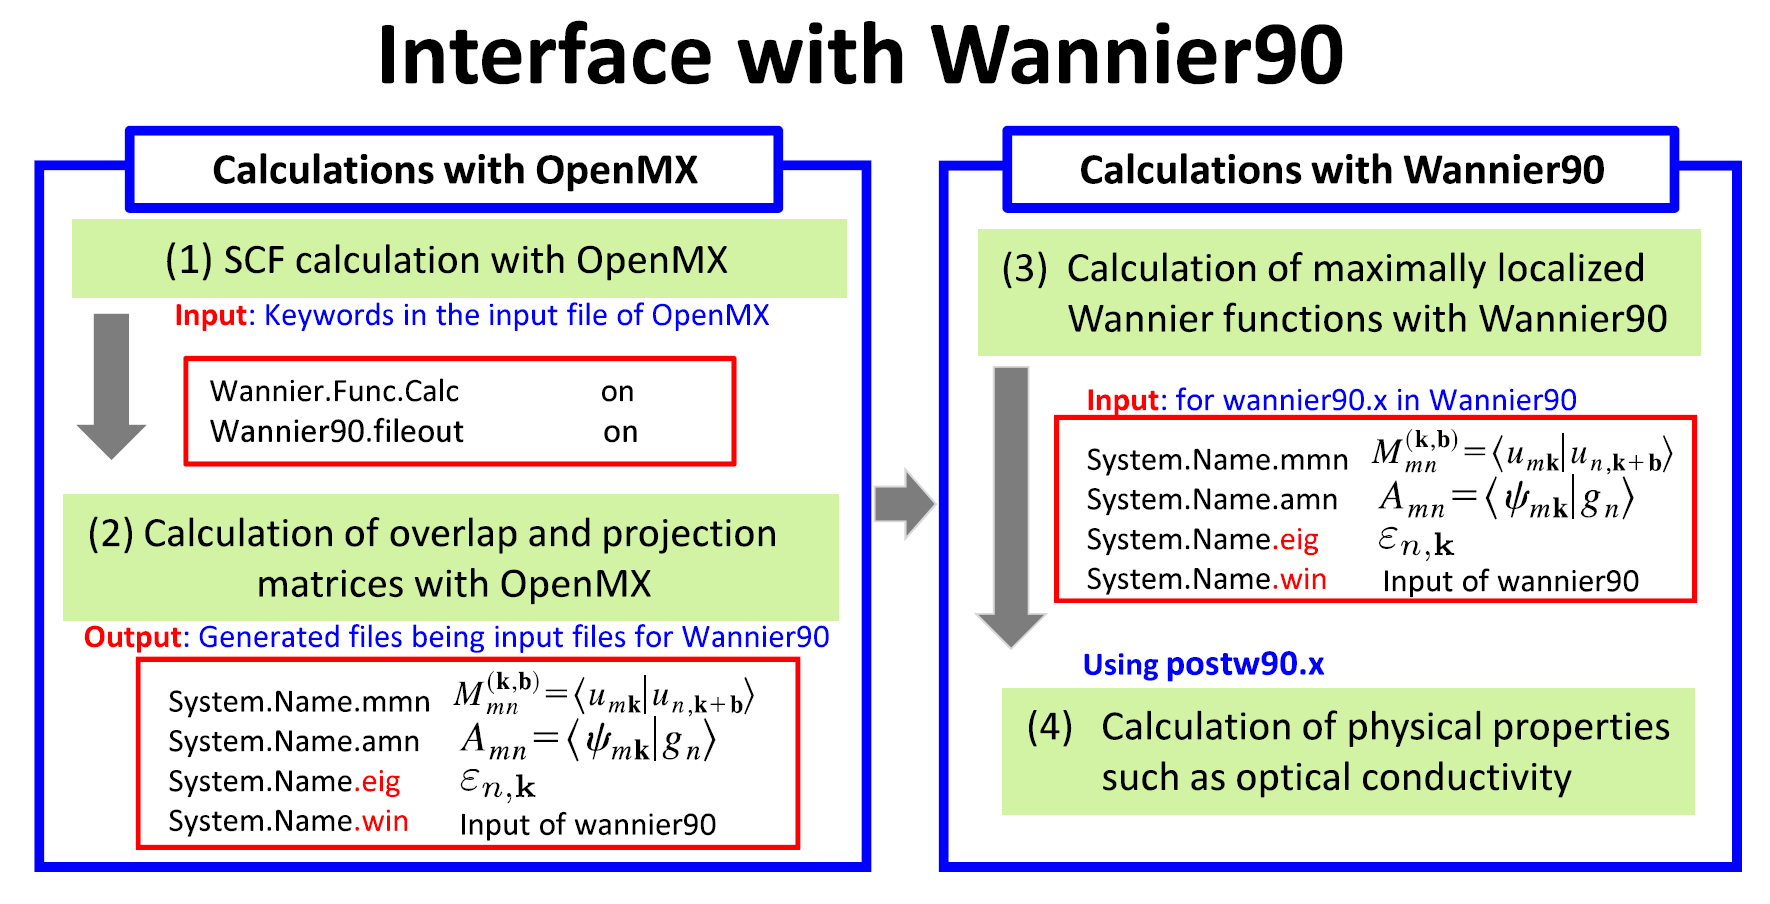 \begin{figure}\begin{center}
\epsfig{file=OpenMX_Wannier90.epsi,width=16.5cm}
\end{center}
\end{figure}